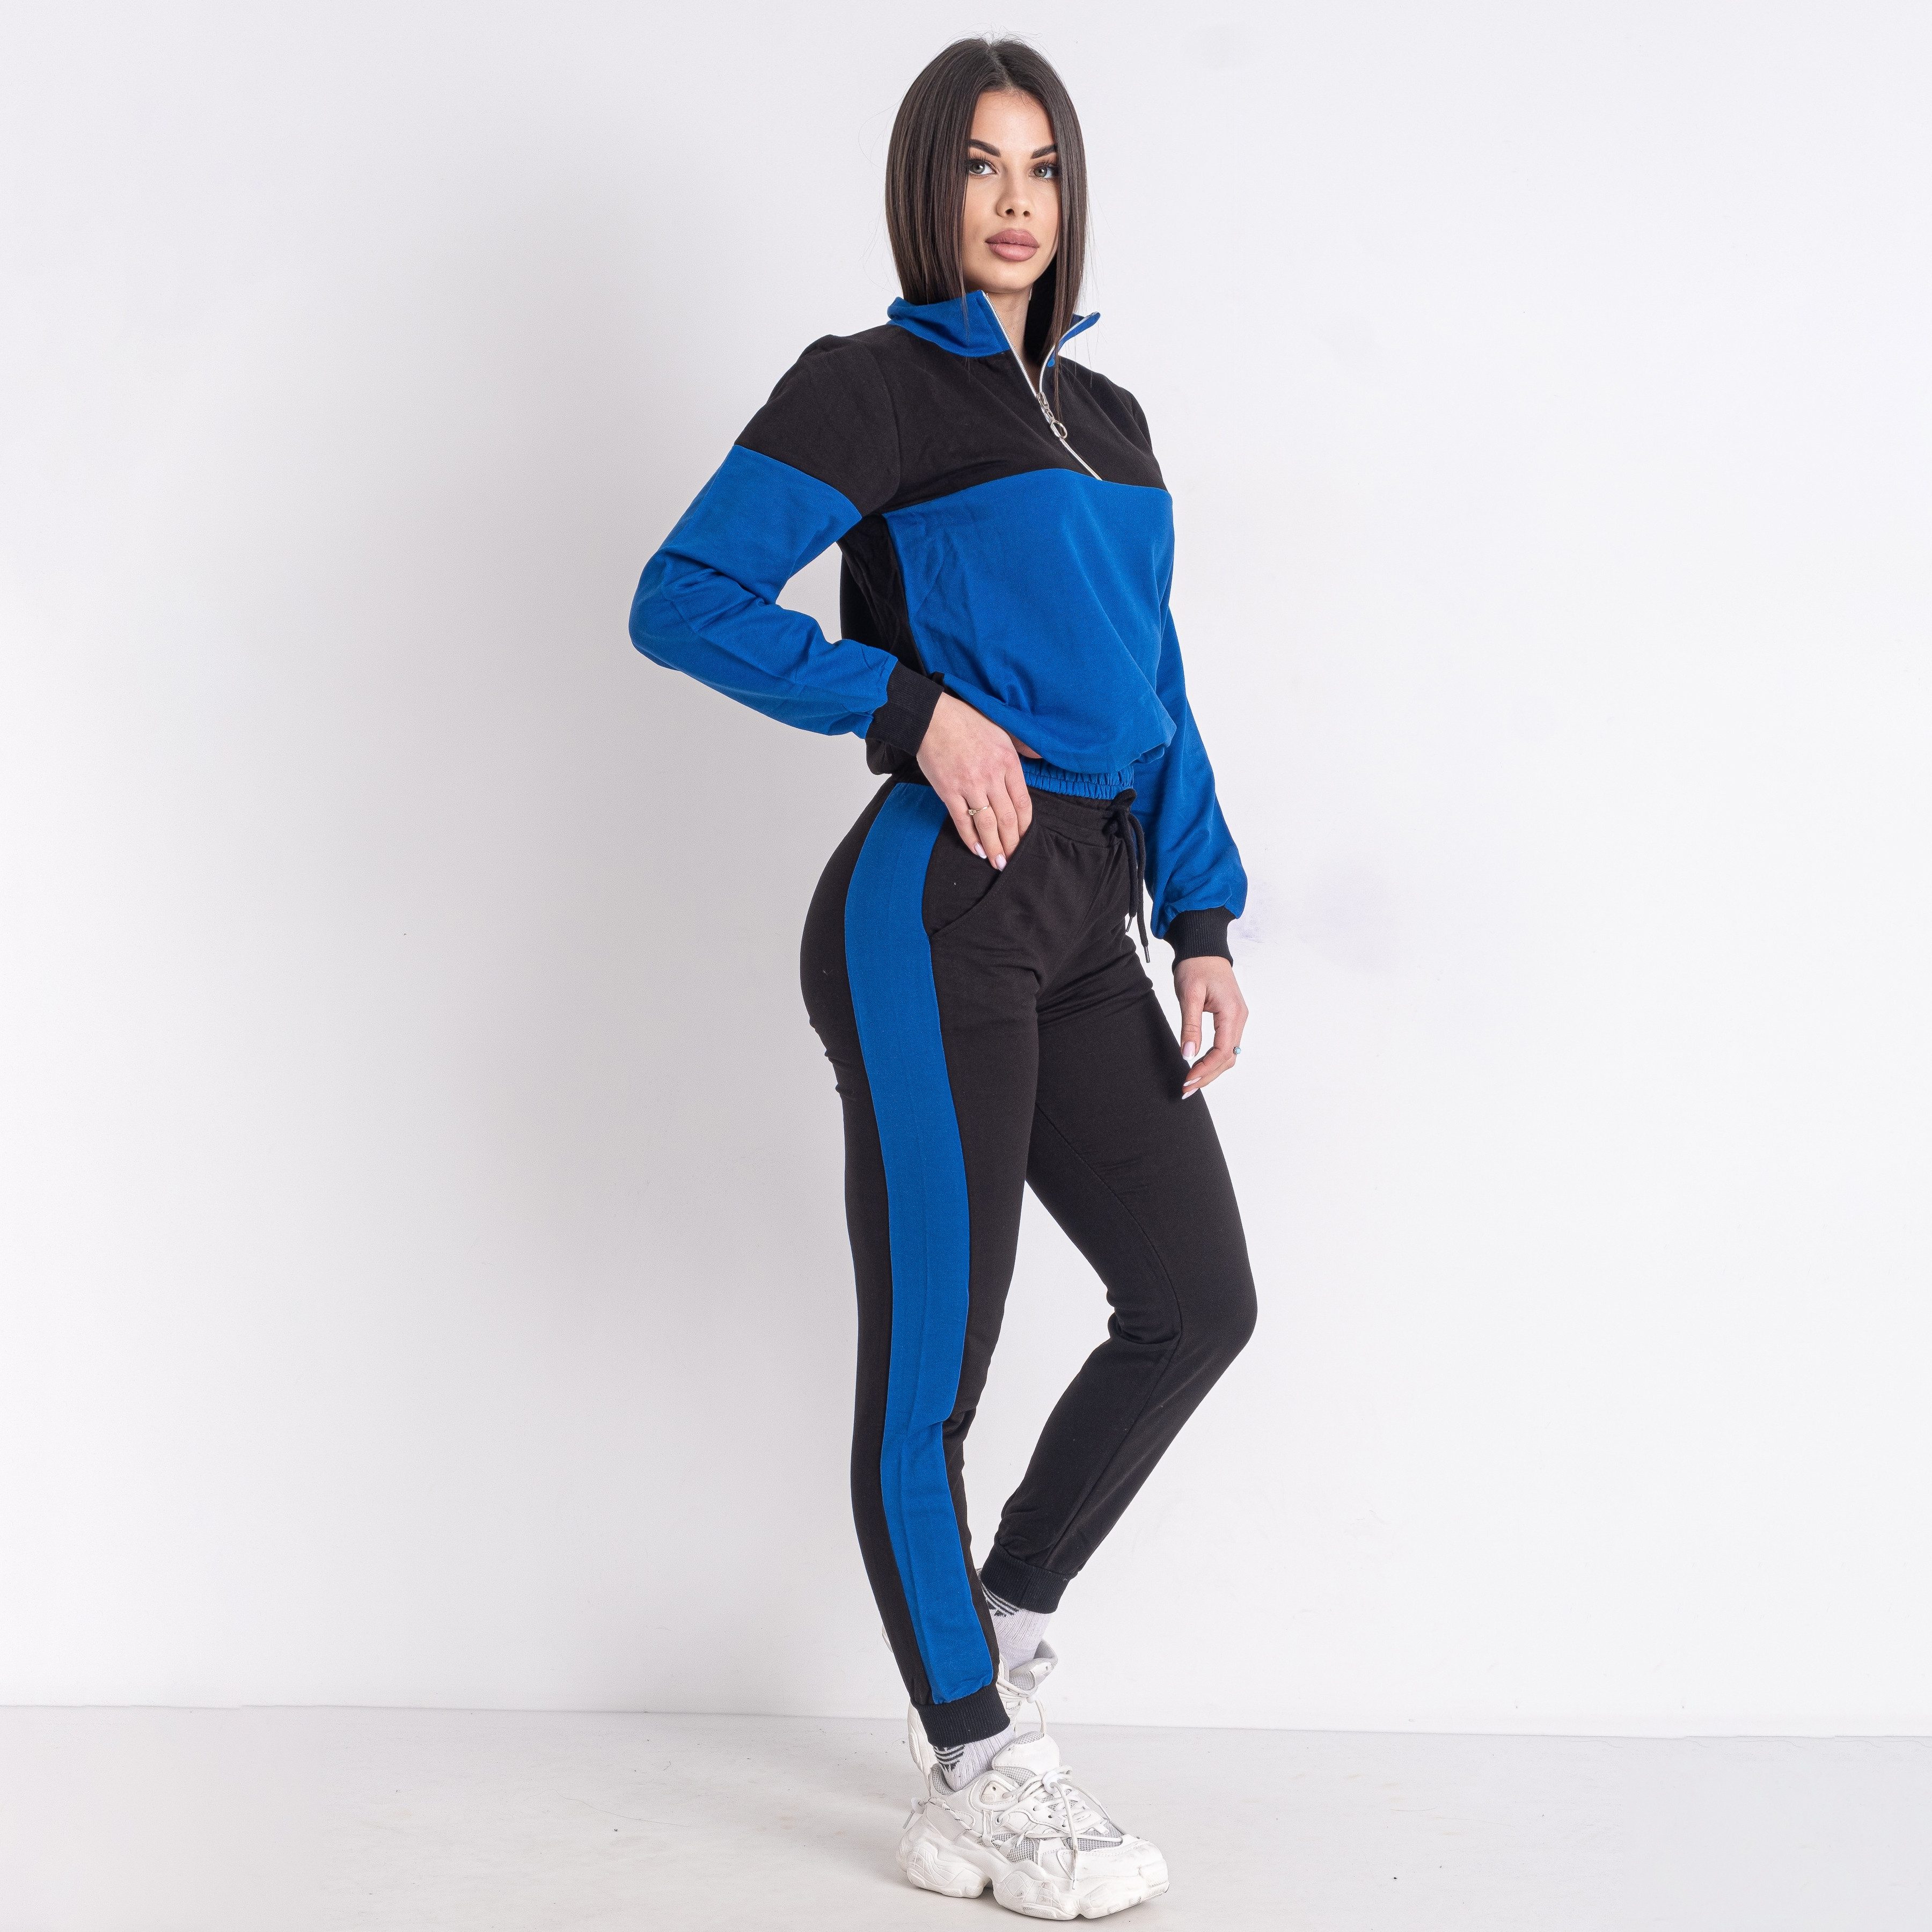 0353-2 черно-синий женский спортивный костюм (двунитка, 4 ед. размеры на бирках: S. M. L. XL, соответствуют молодежке XXS. XS. S. M)